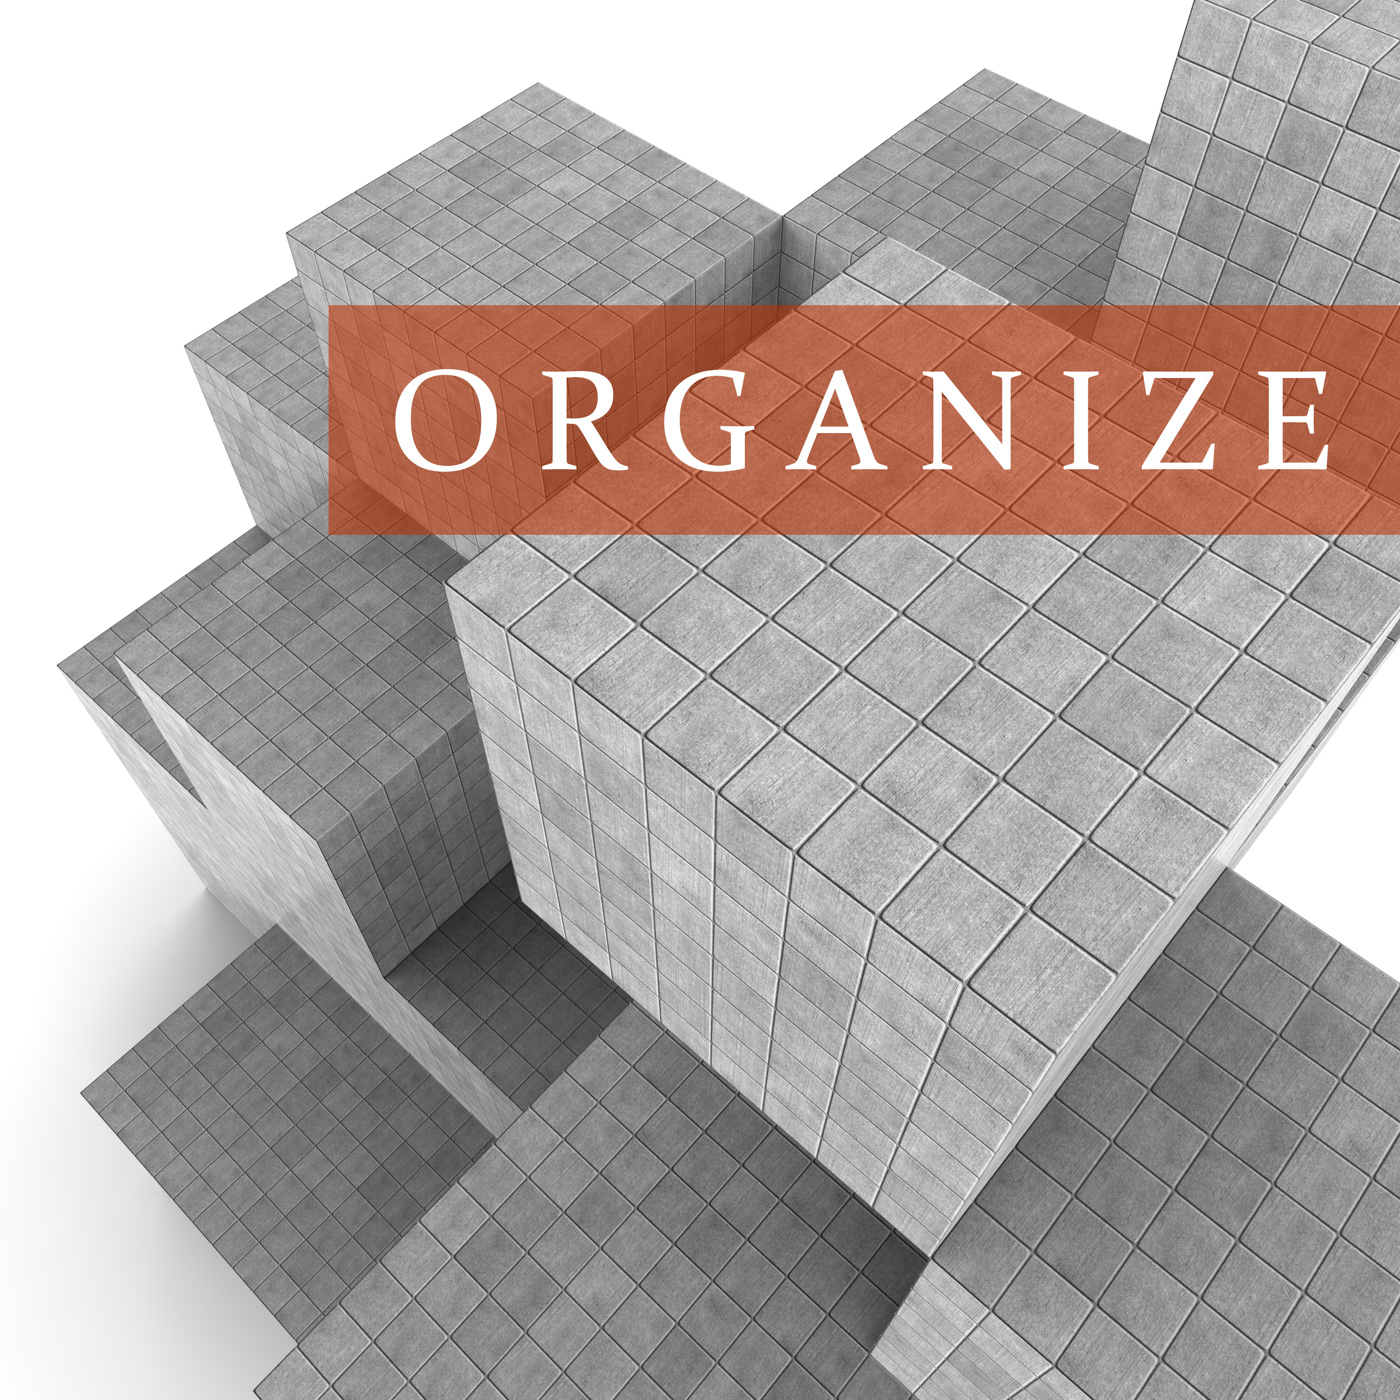 Organize blocks represents organizing organization and structured 3d r photo